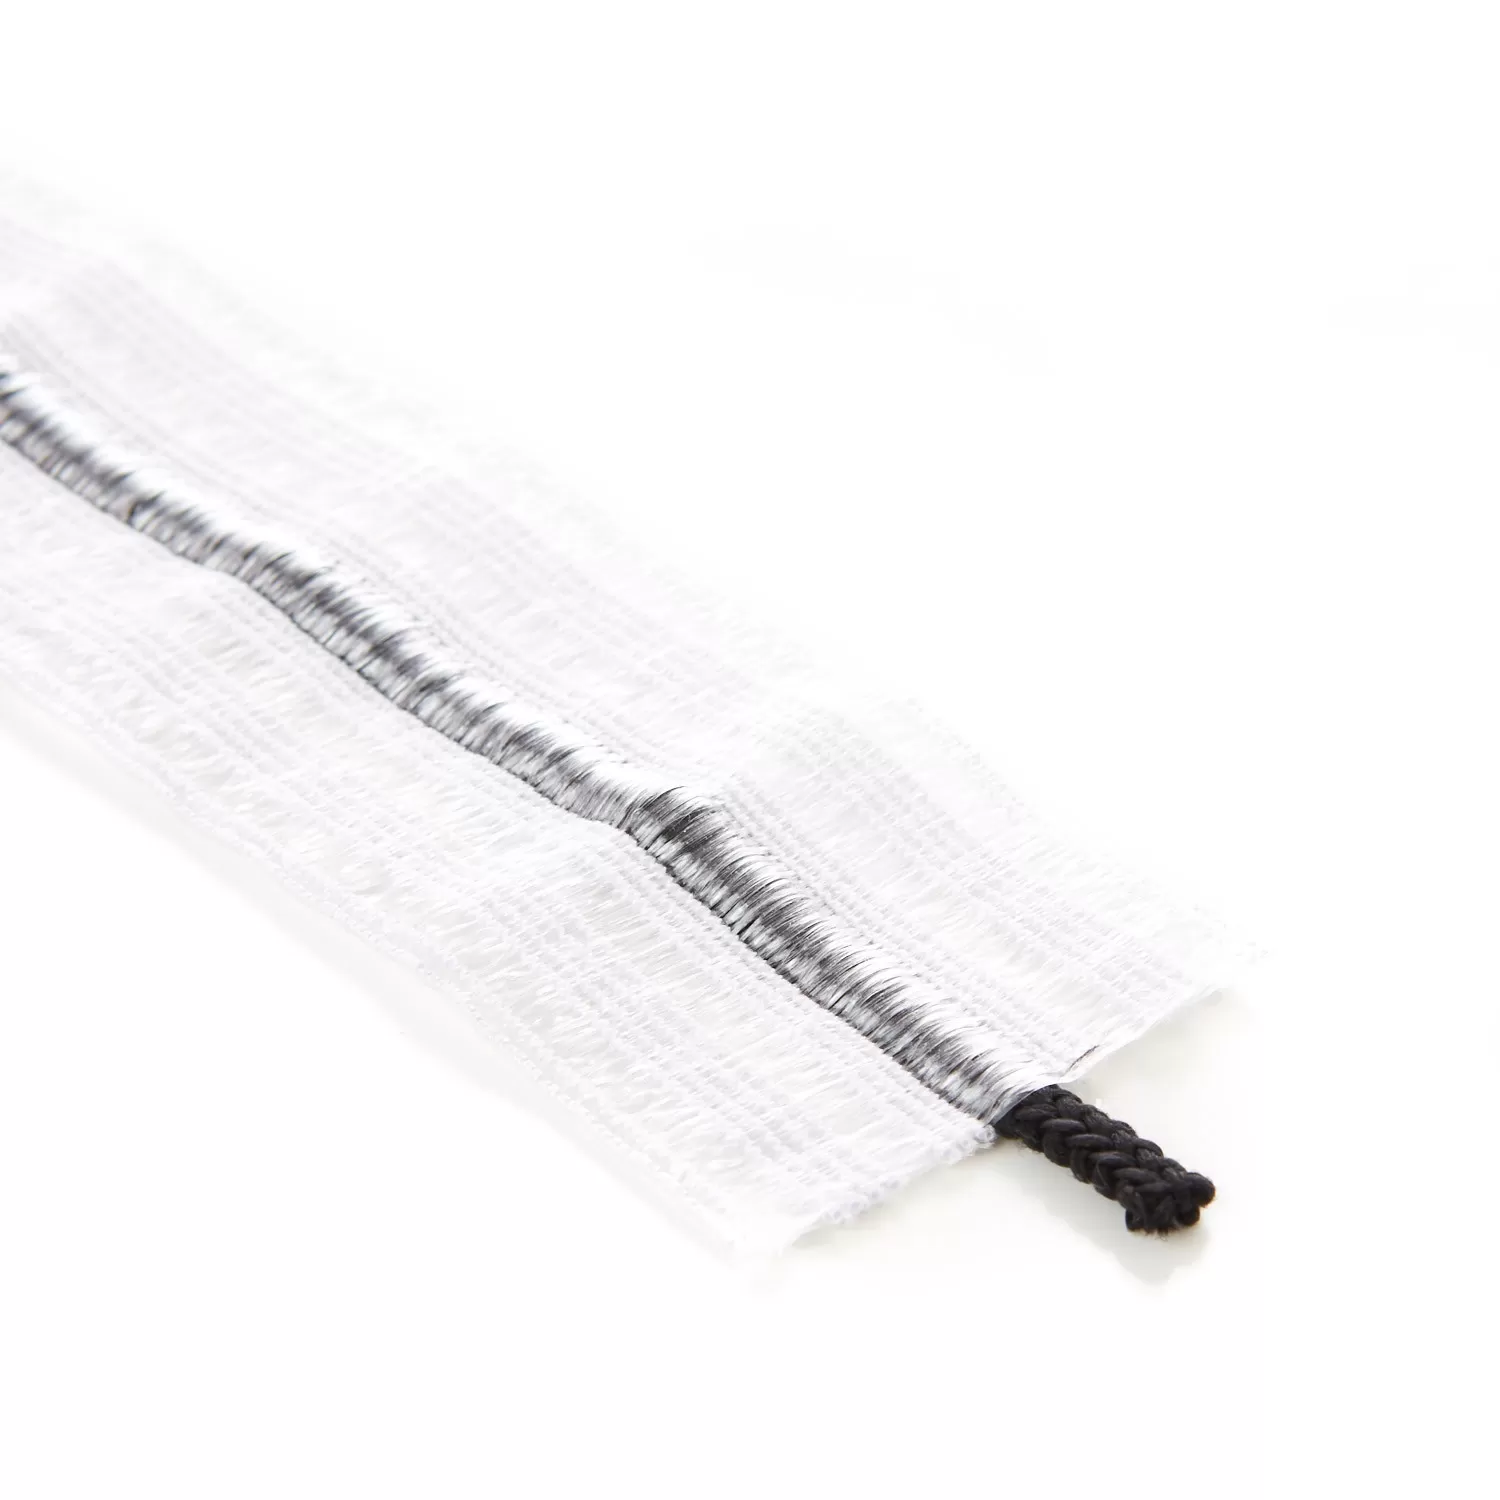 48mm Bonadex Waistband Elastic White Ecru with Black Drawstring Drawcord by Kalsi Cords